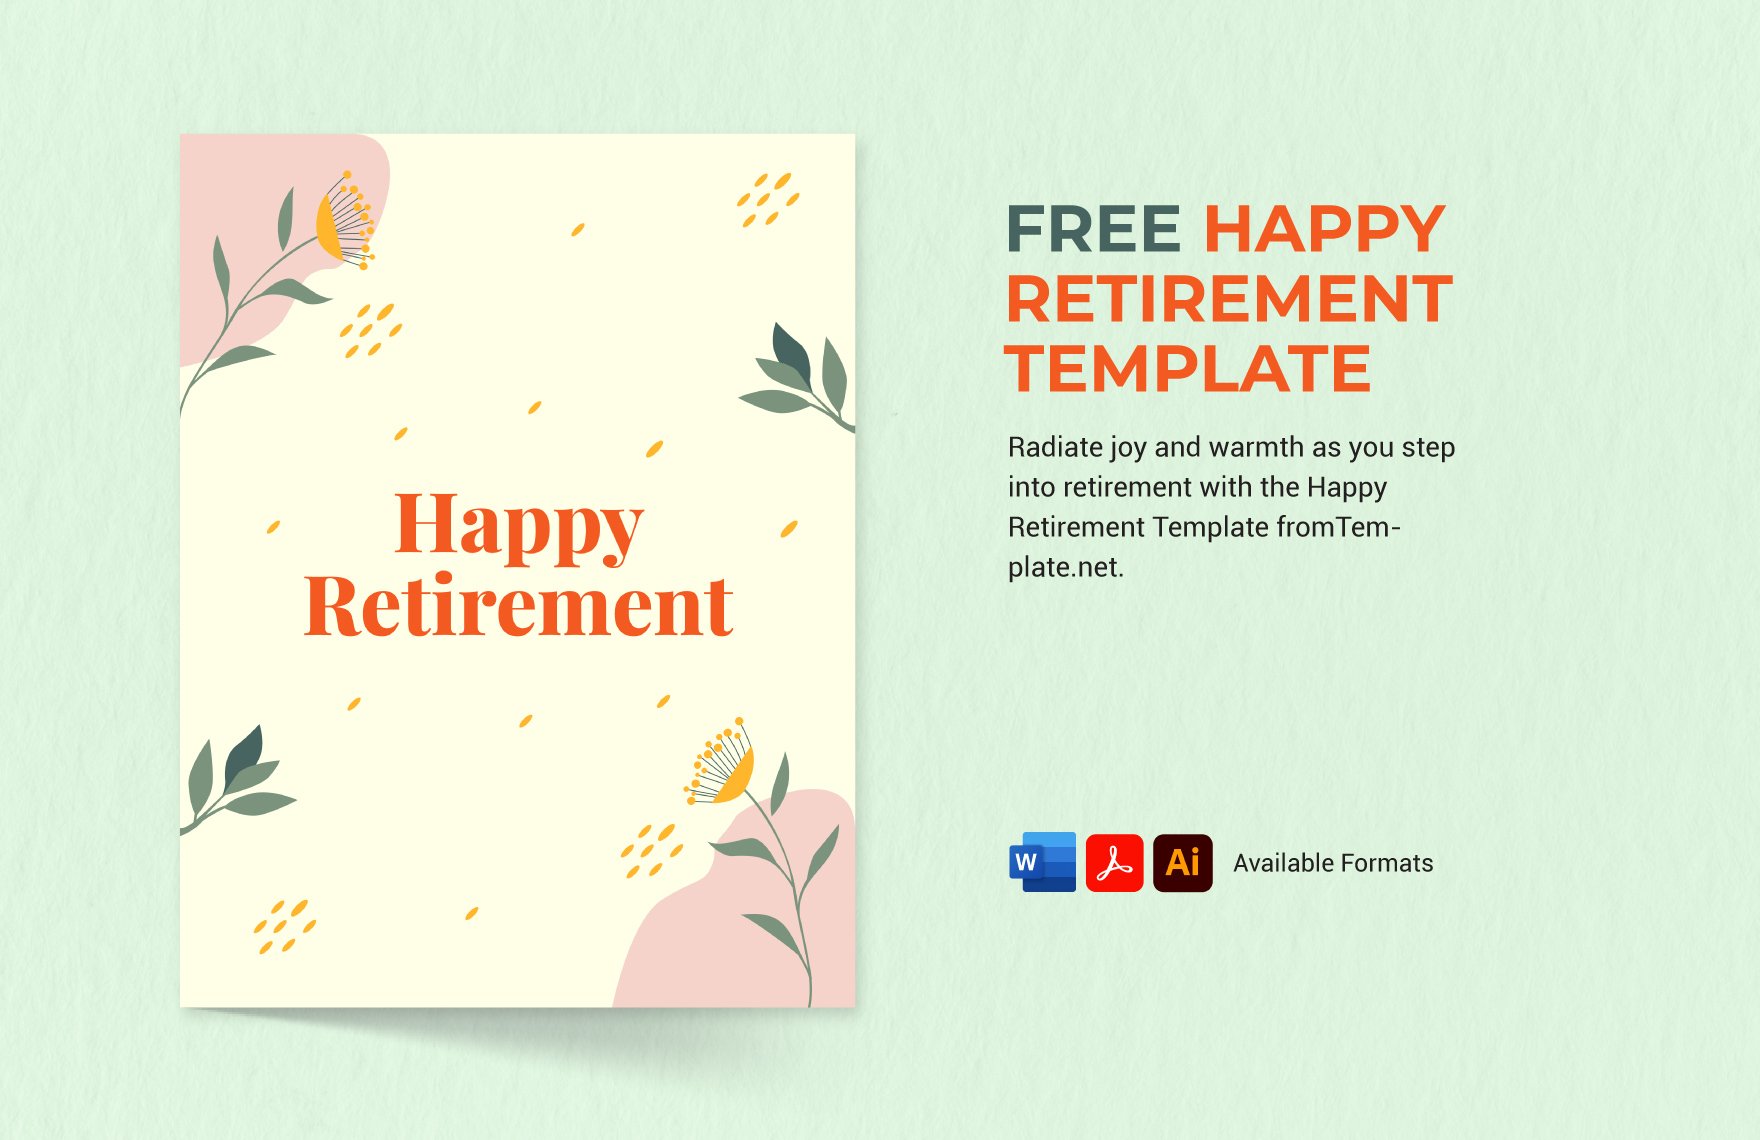 Free Happy Retirement Template in Word, PDF, Illustrator